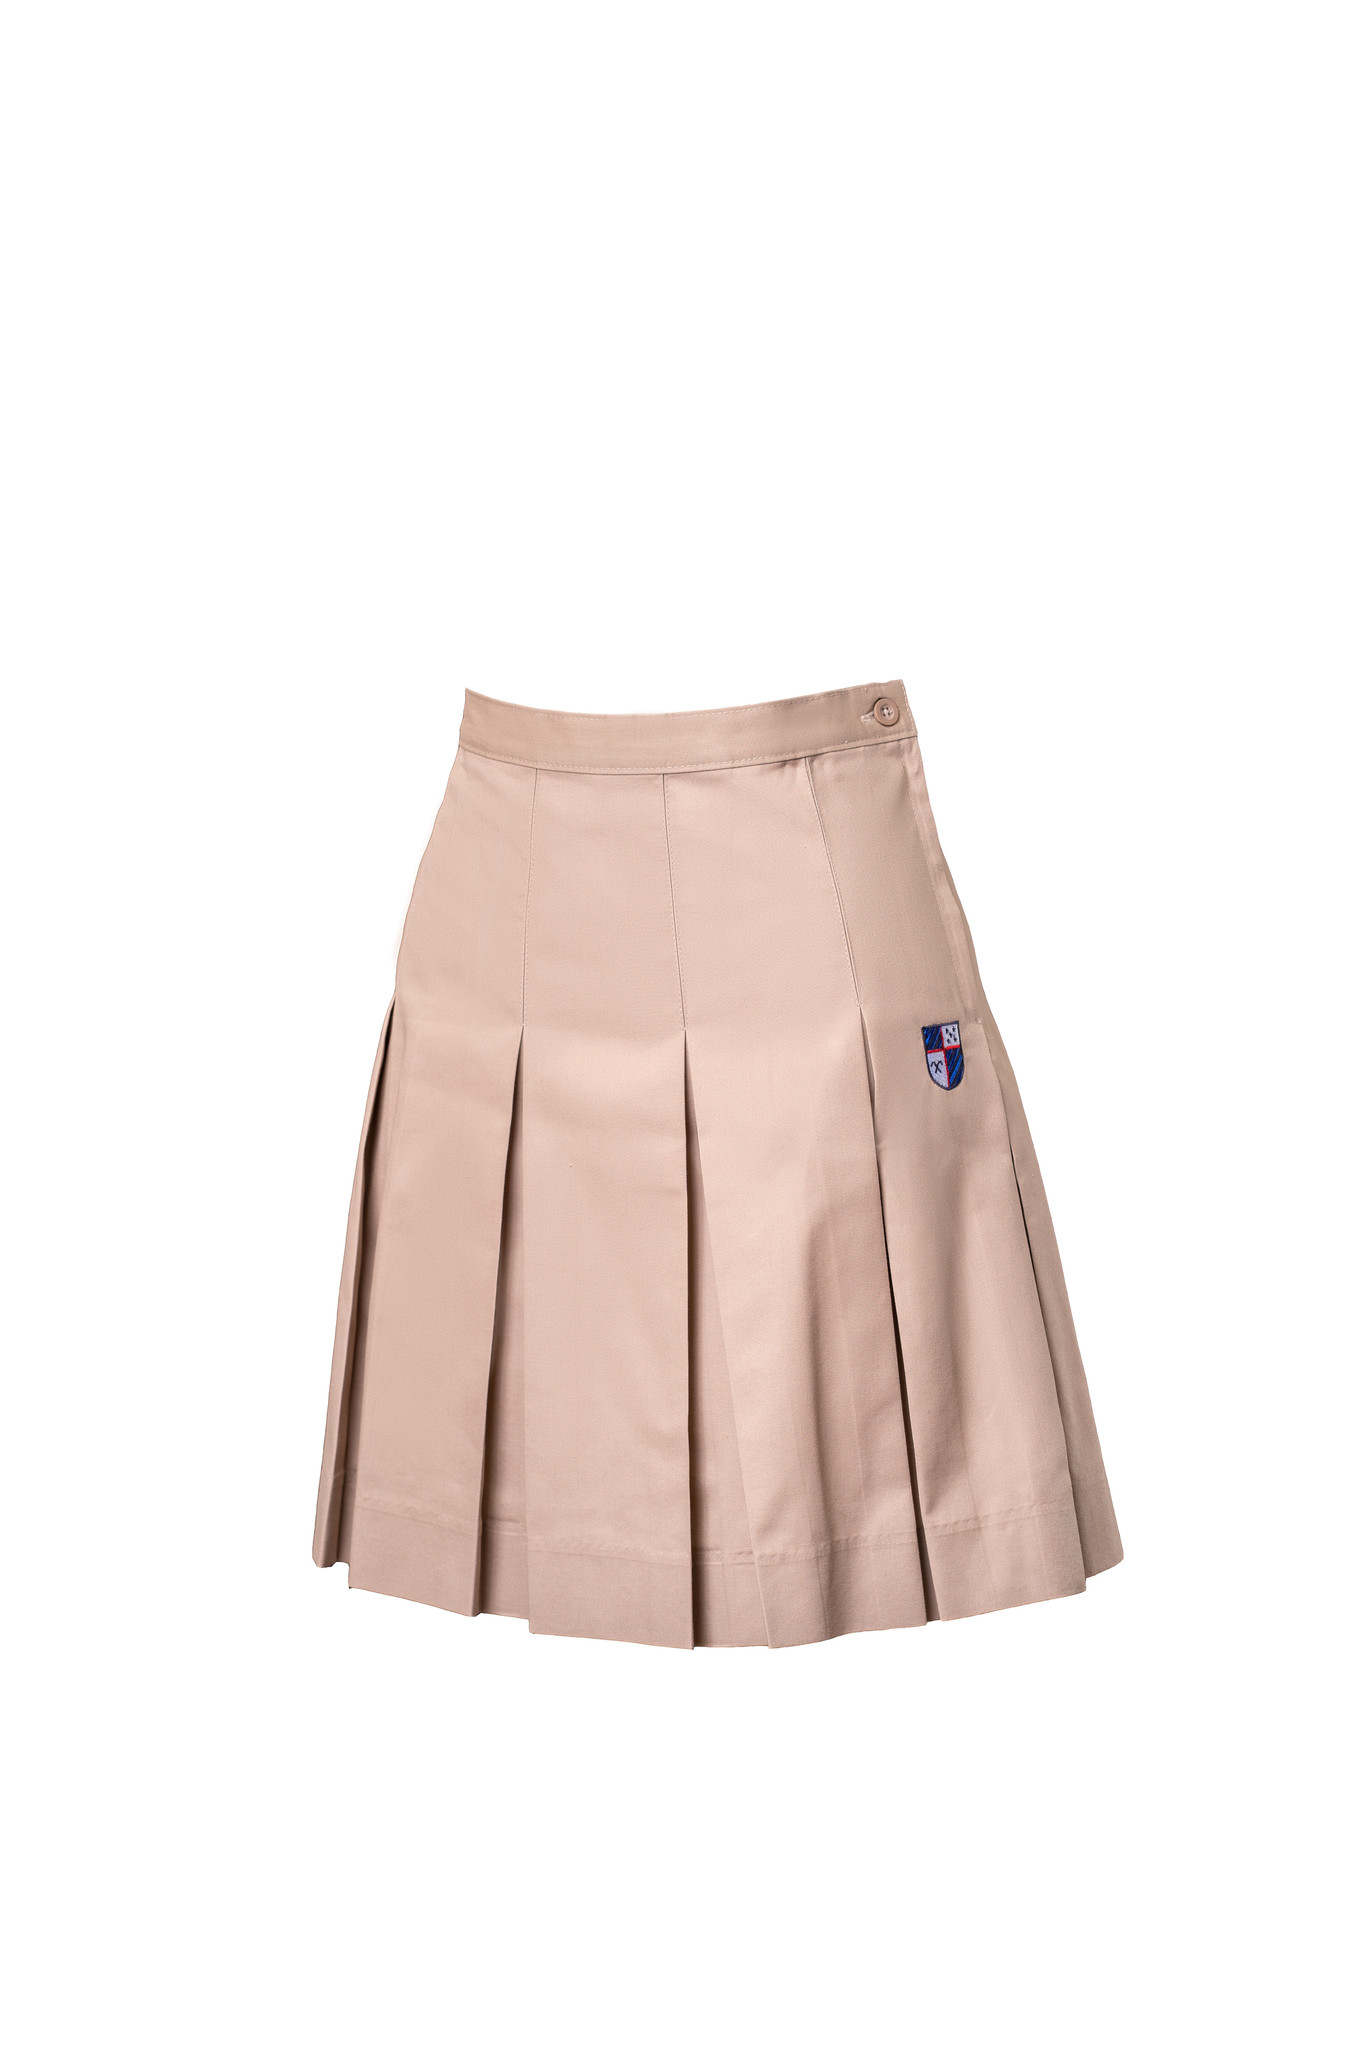 La Salle College Preparatory Khaki Skirt - FINAL SALE